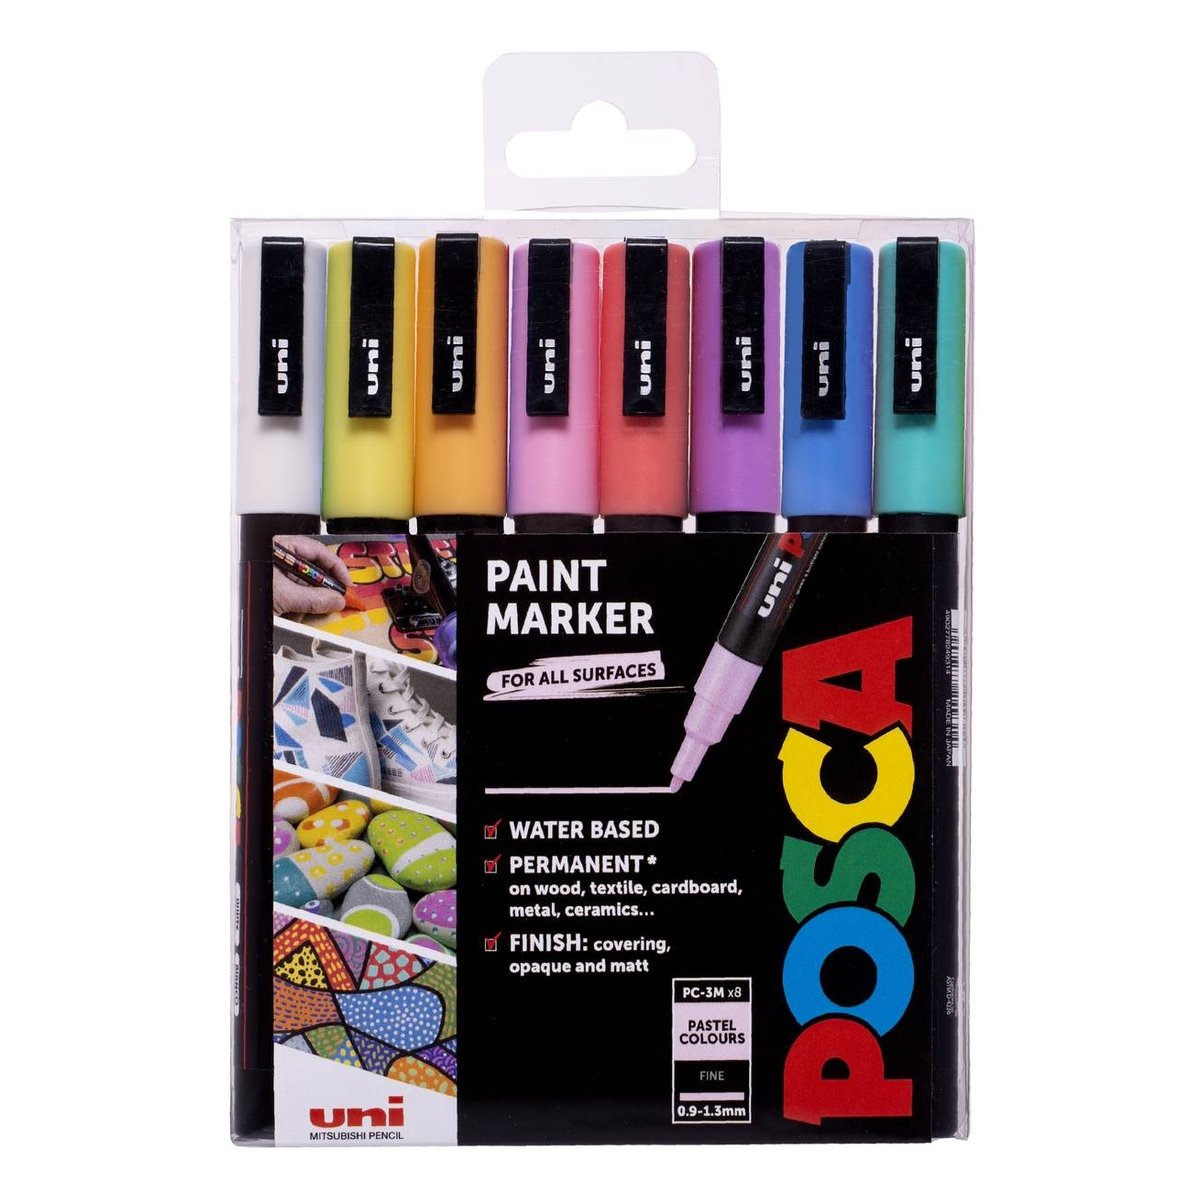 The new POSCA Pastel range is out now! Available at Cult Pens easichalk.com  Hobbycraft #POSCAPastels #POSCA #PenArt #Doodles #PaintPen #POSCAart, By POSCA UK